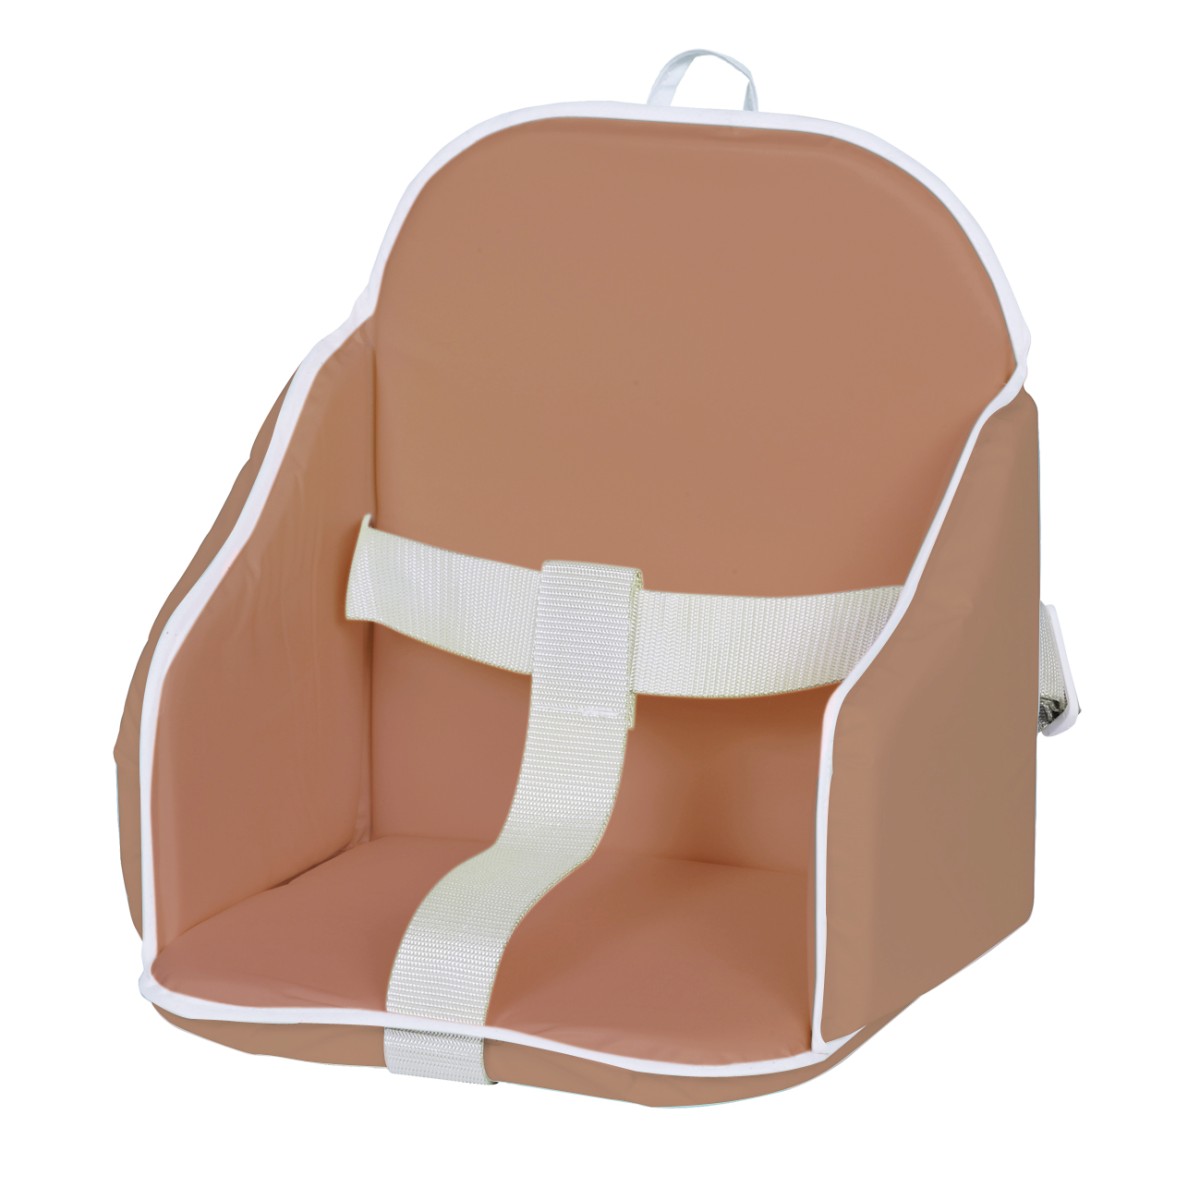 Highchair cushion in pvc with straps - Brown sugar